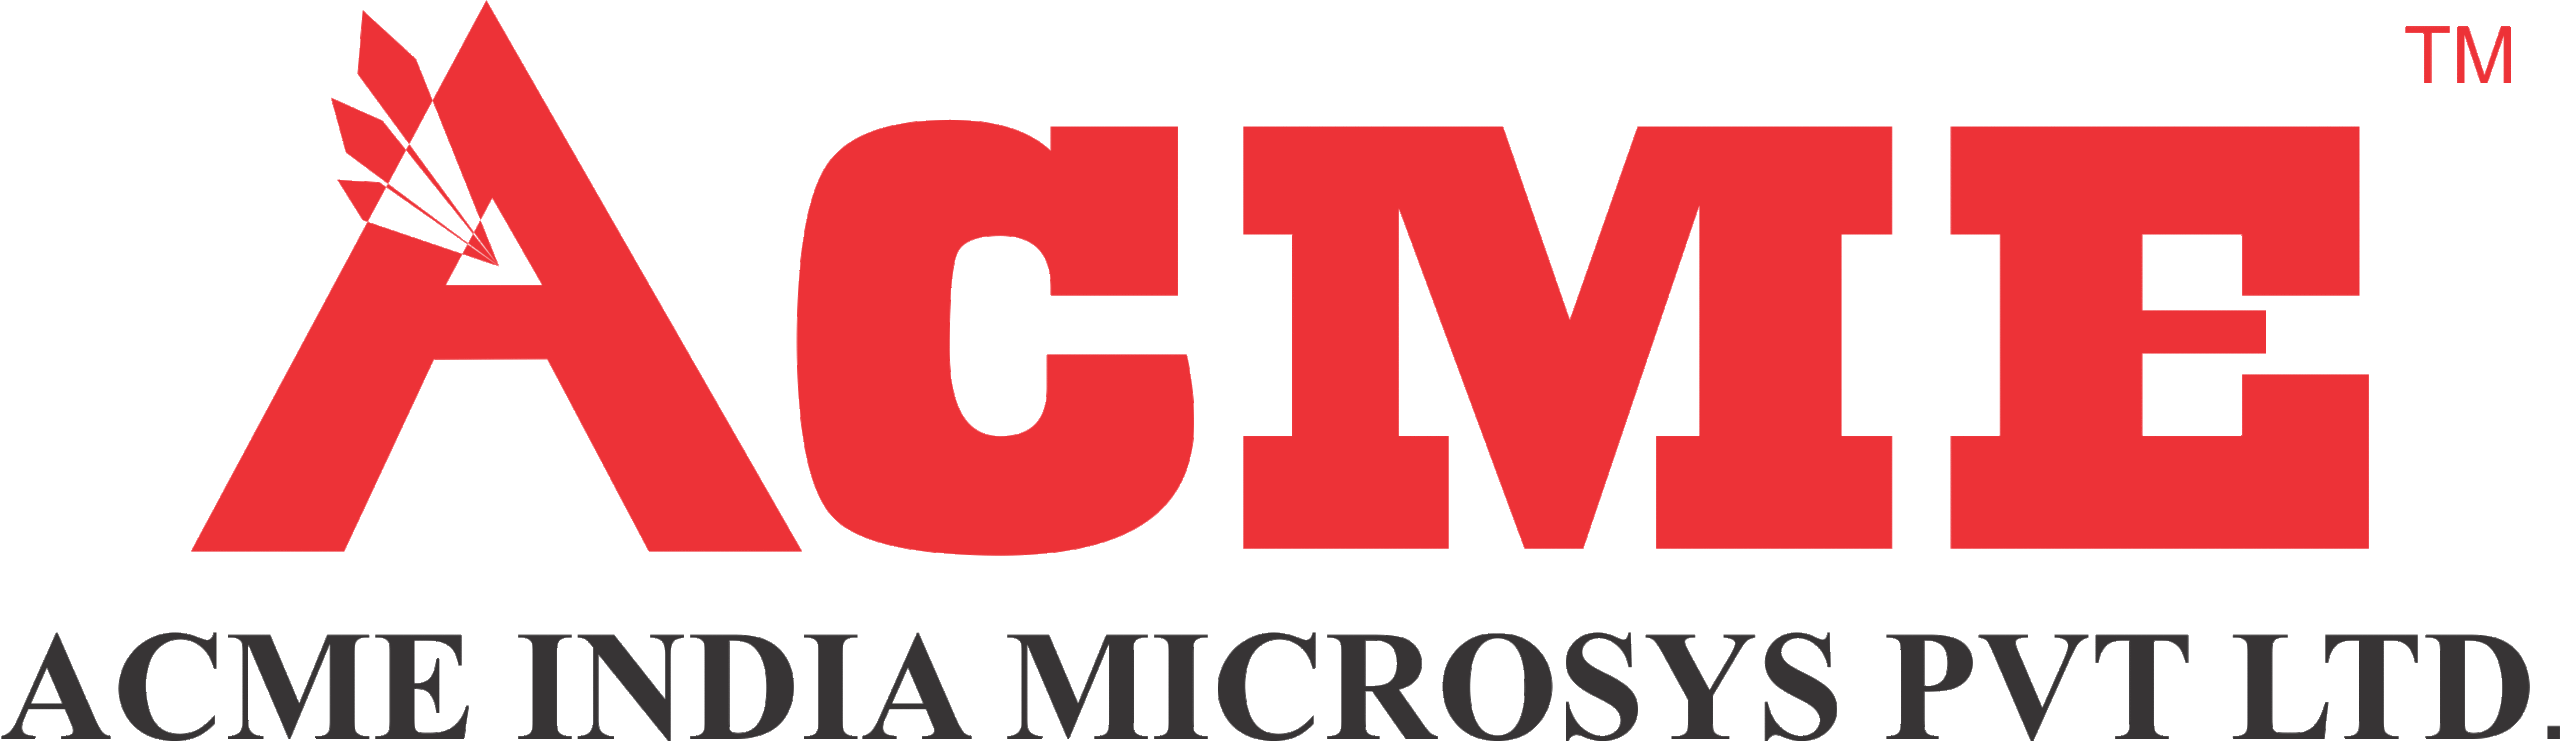 Acme India Microsys PVT LTD